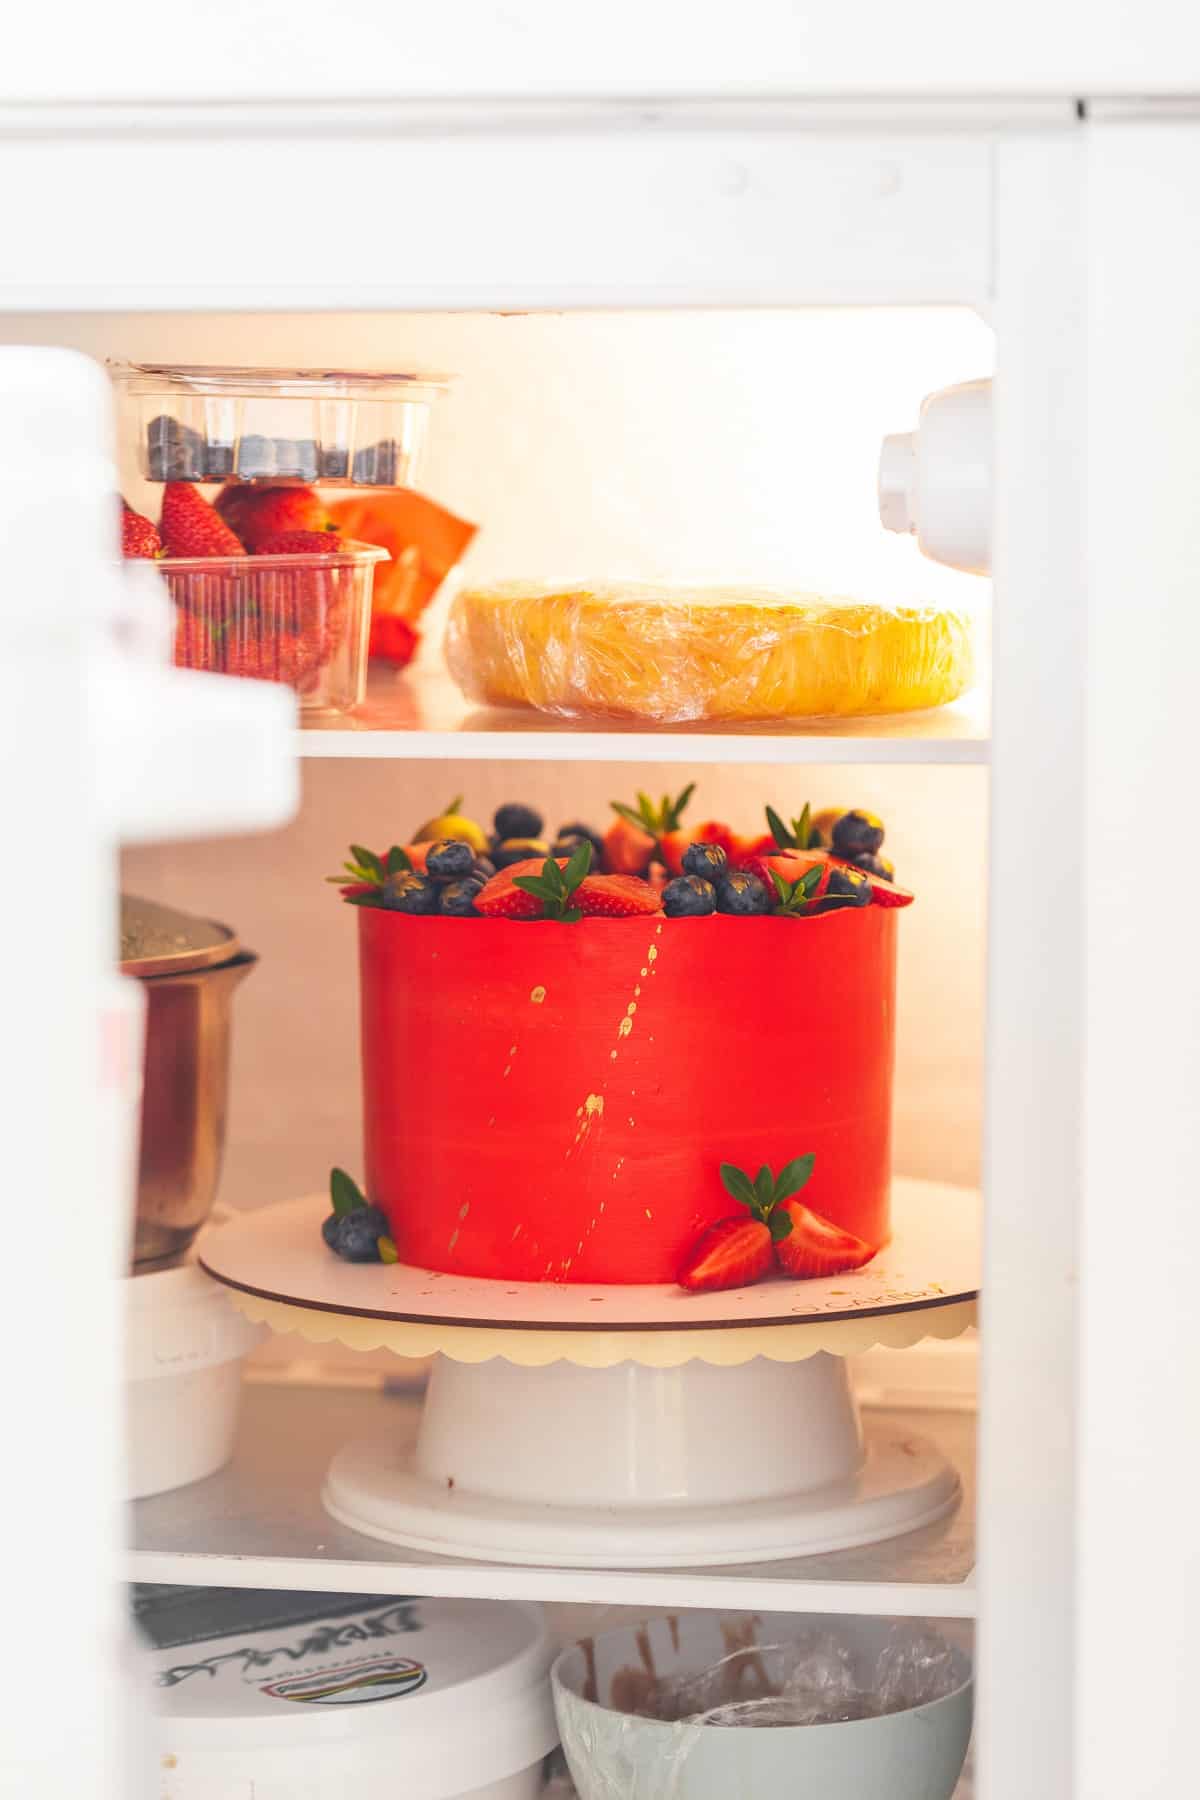 Red cake on a shelf in the fridge.